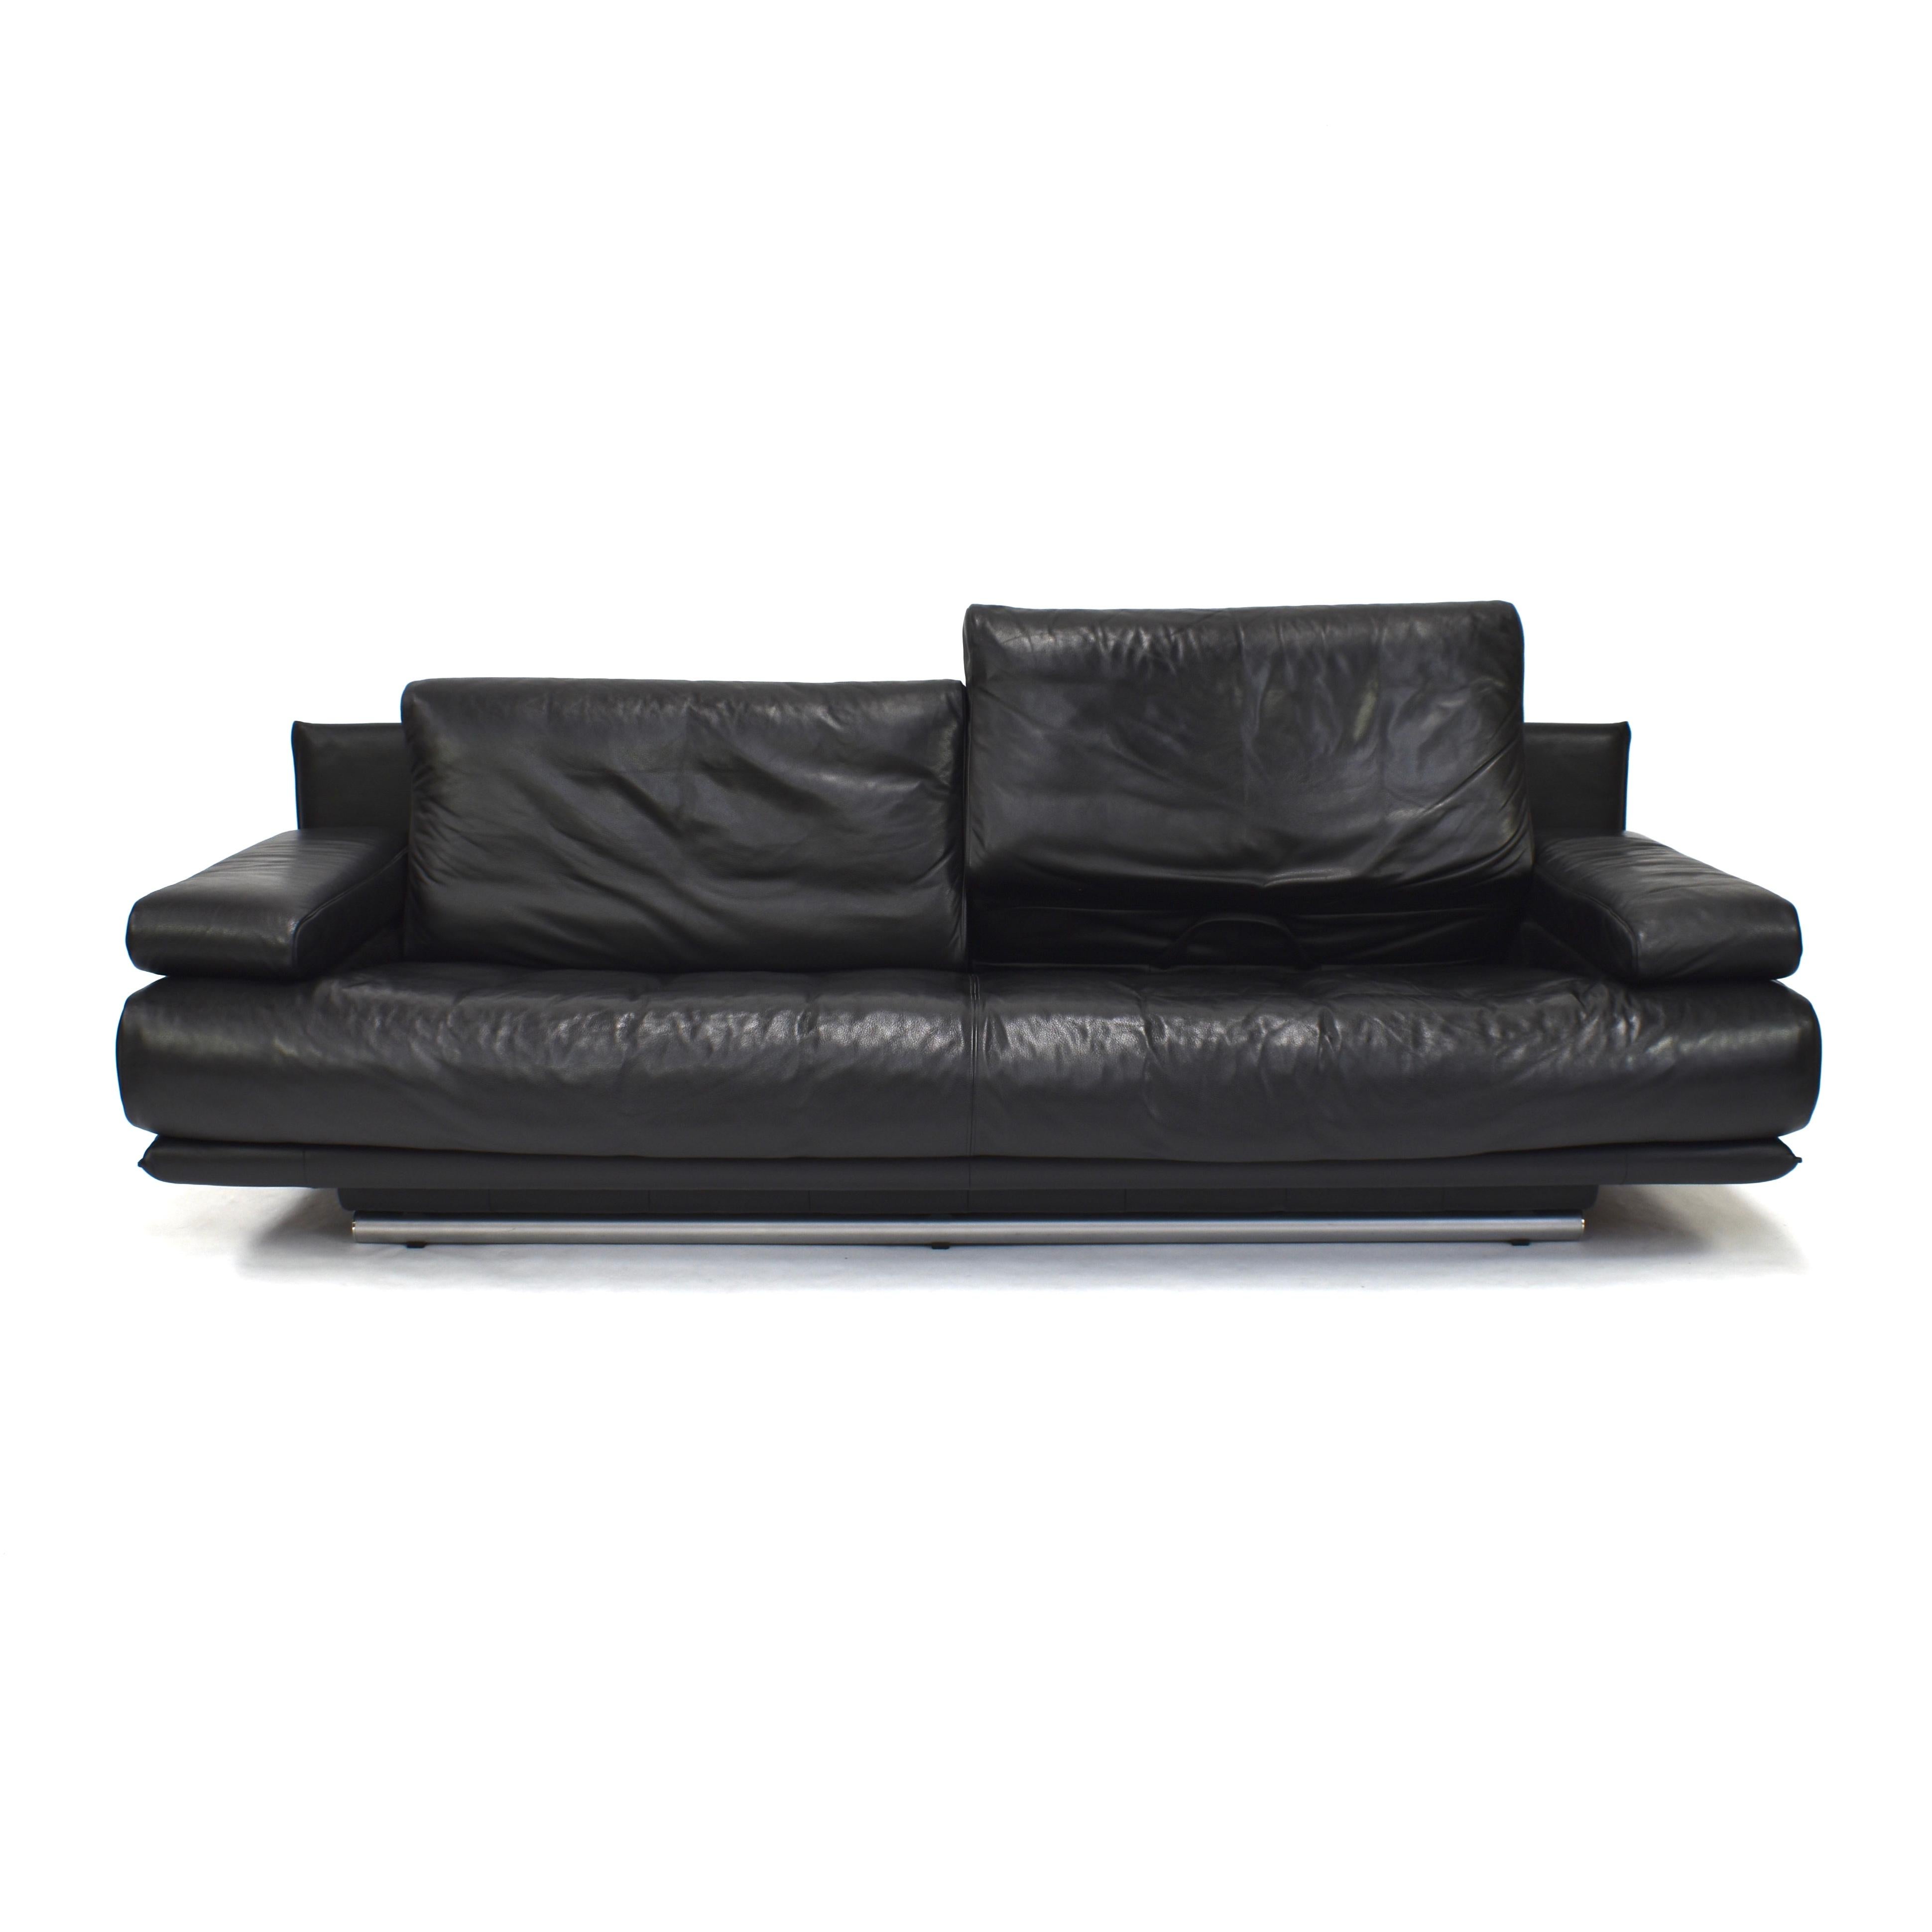 German Rolf Benz Model 6500 Sofa in Black Leather by Mathias Hoffmann